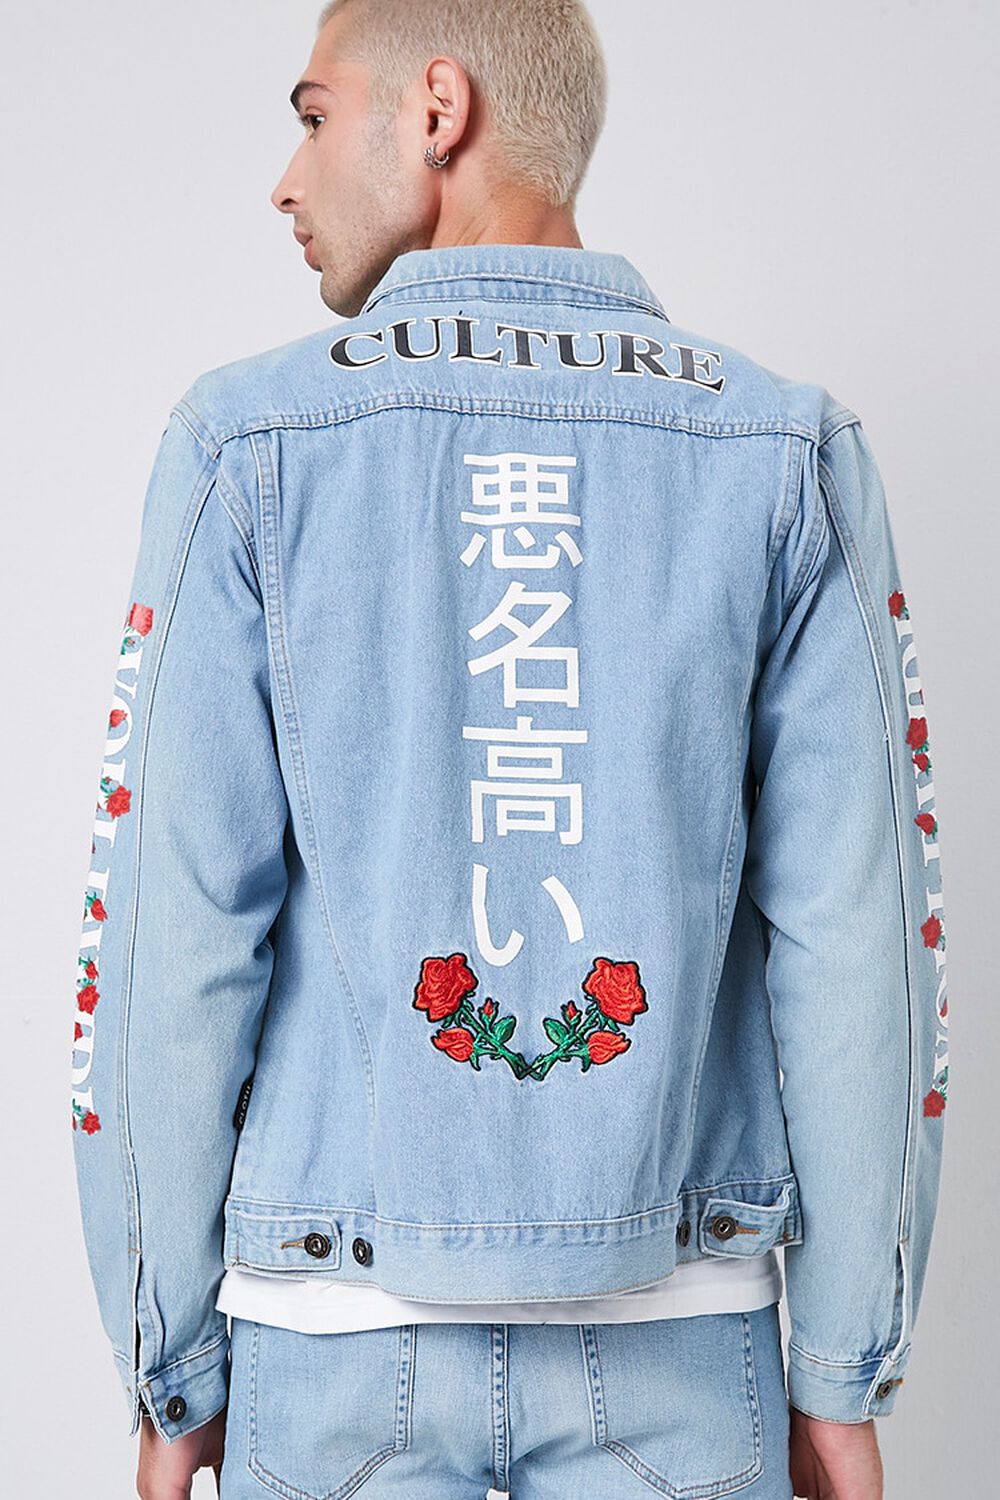 Svinde bort Derive operatør Culture Rose Embroidered Graphic Denim Jacket